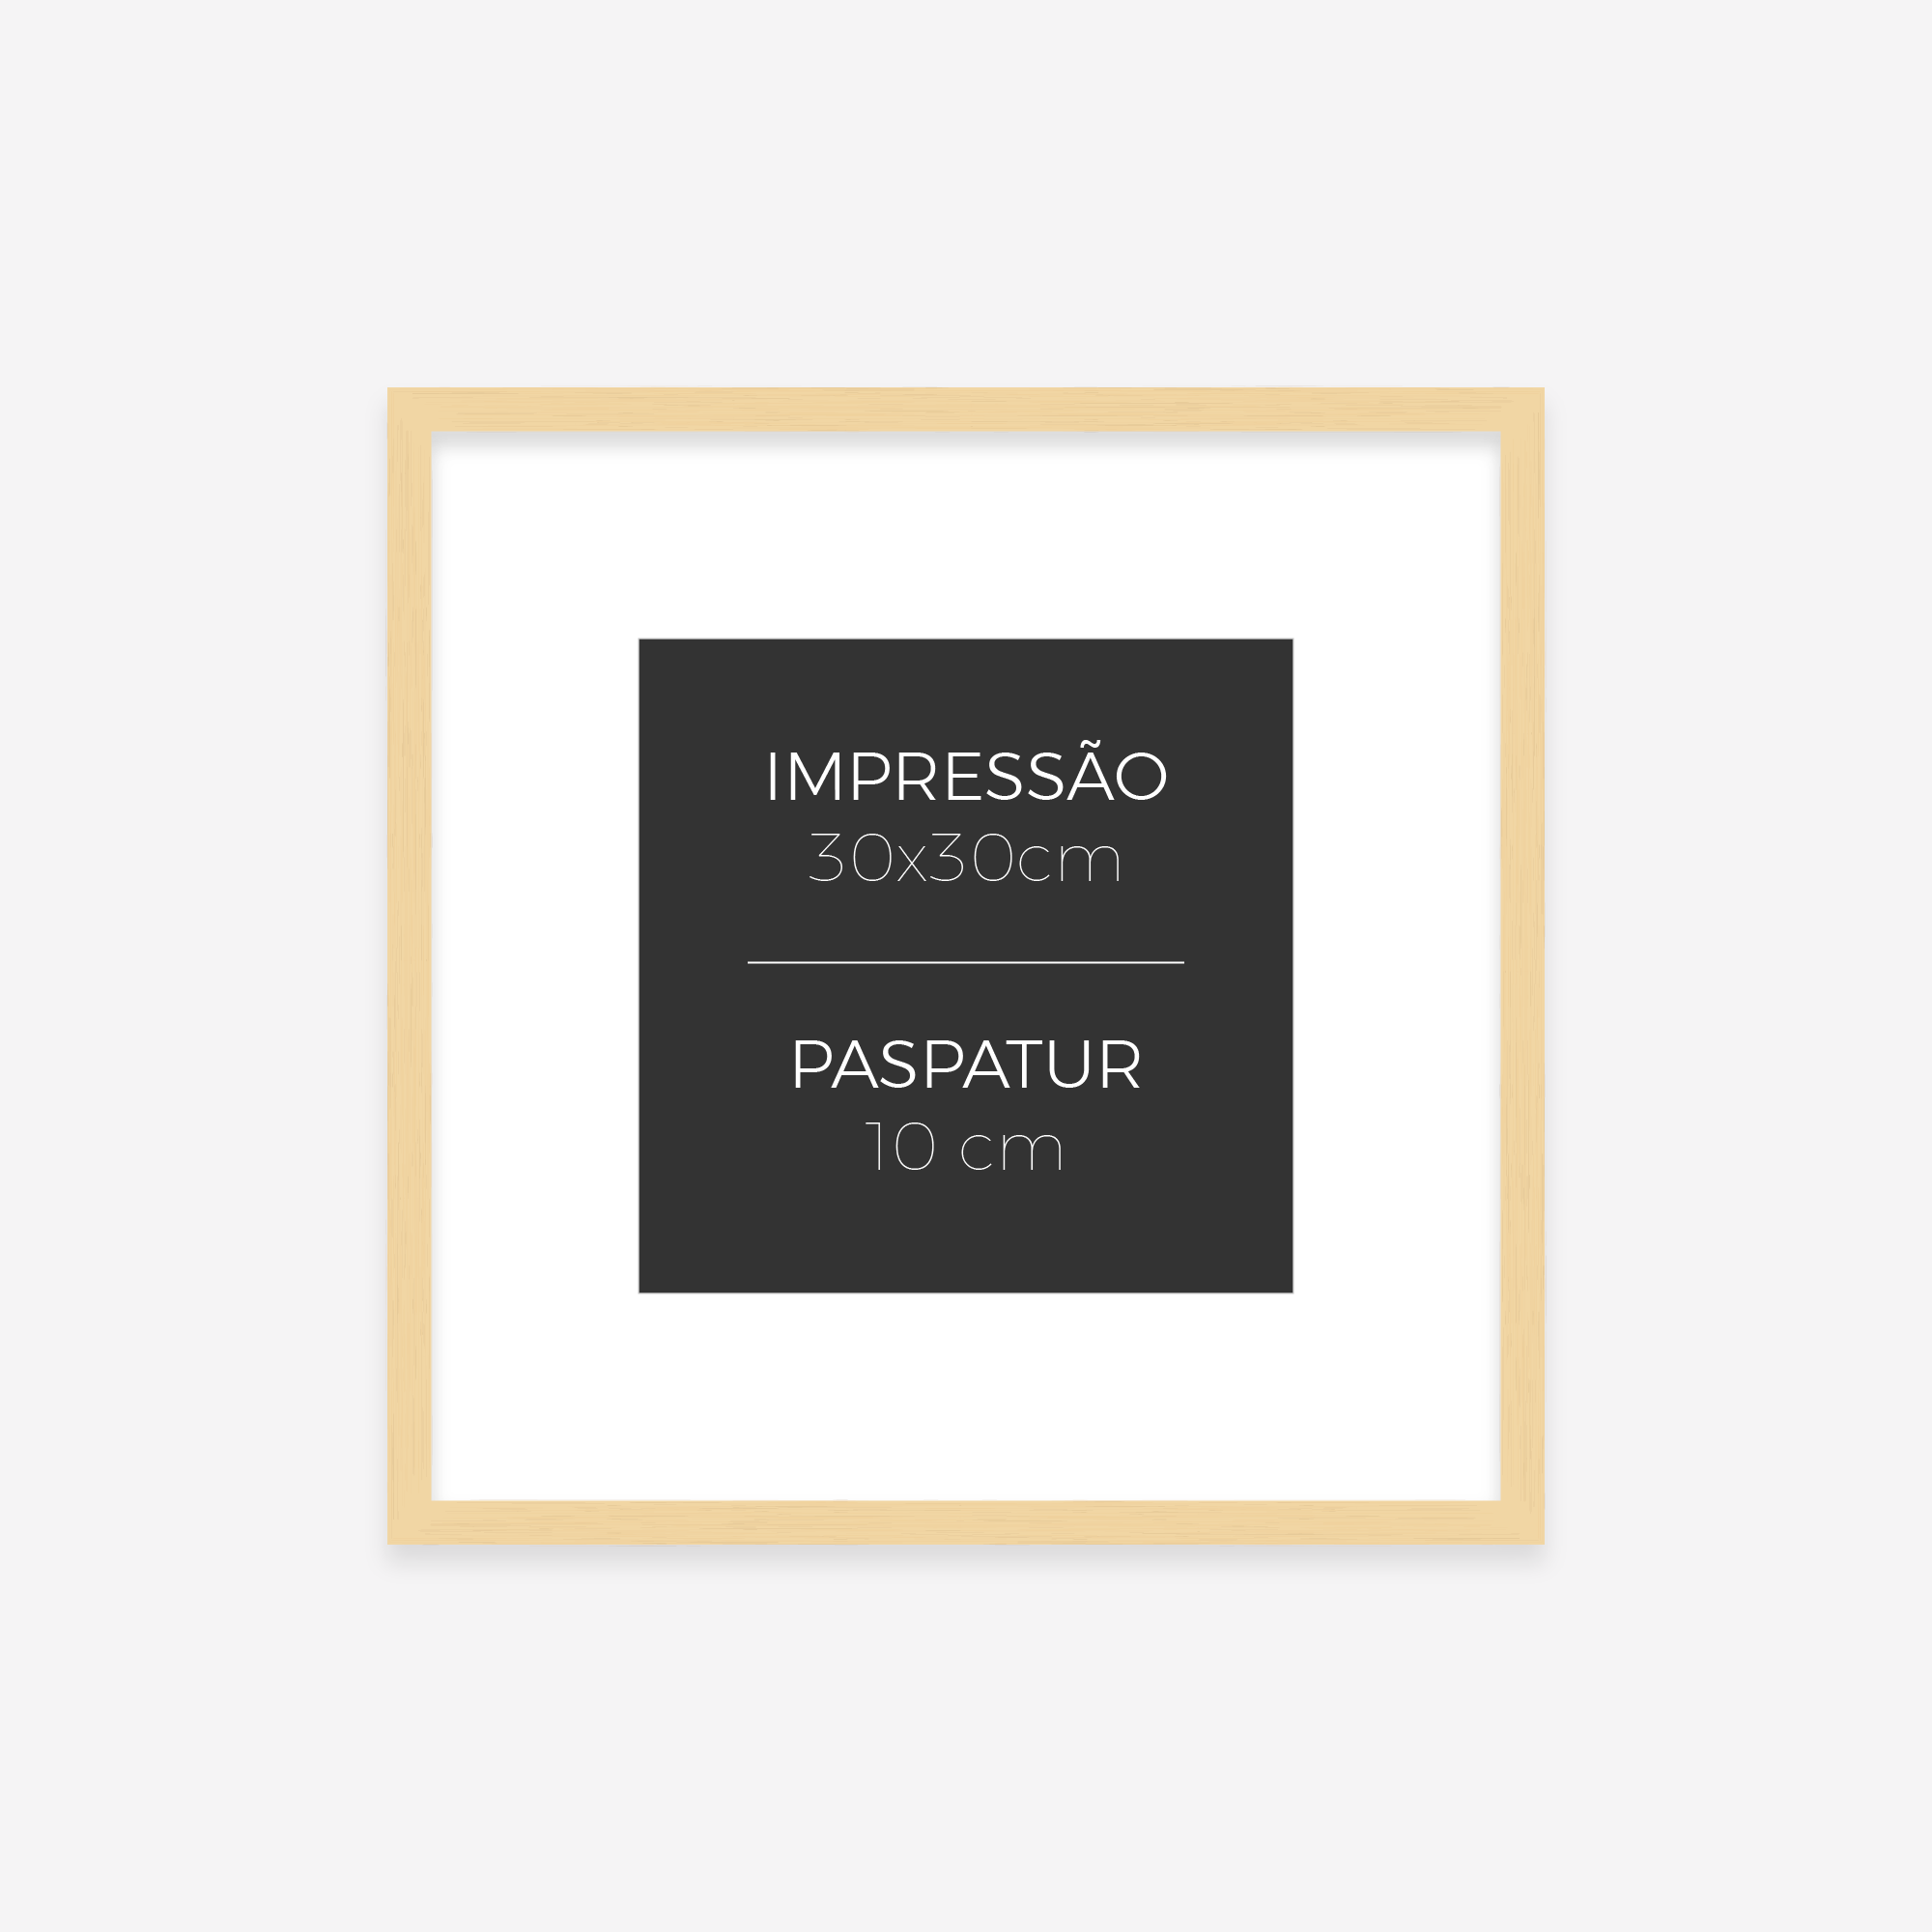 Moldura 50x50cm • Impressão Fine Art Tamanho 30x30cm • Pastatur 10cm